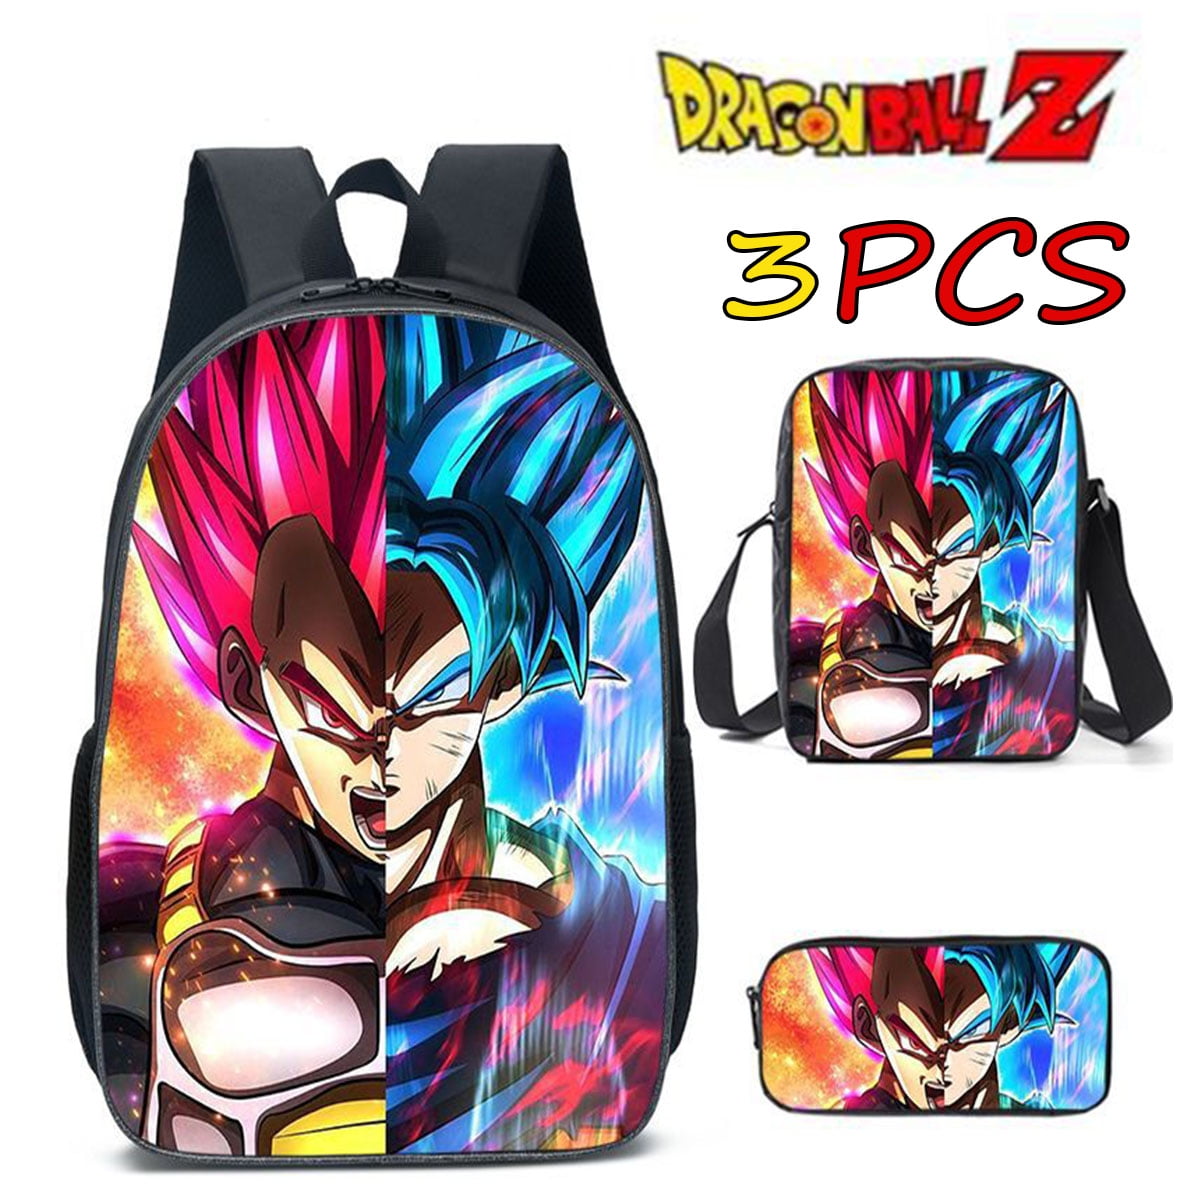 3pcs/set Dragon Ball Z Backpack Anime Cartoon Super Saiyan Goku